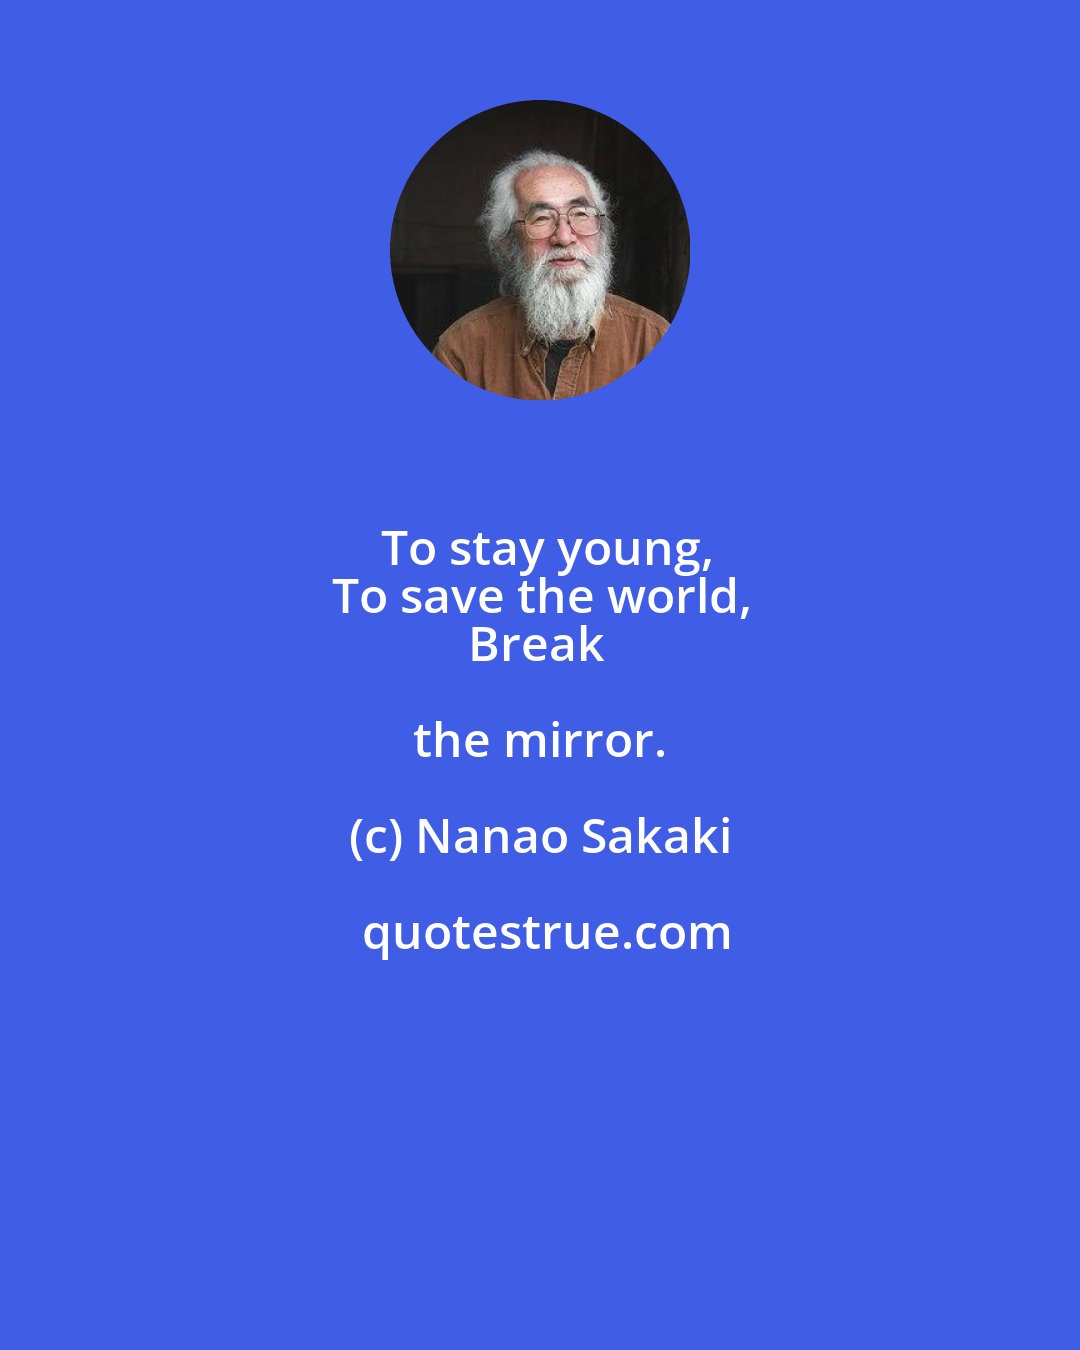 Nanao Sakaki: To stay young,
To save the world,
Break the mirror.